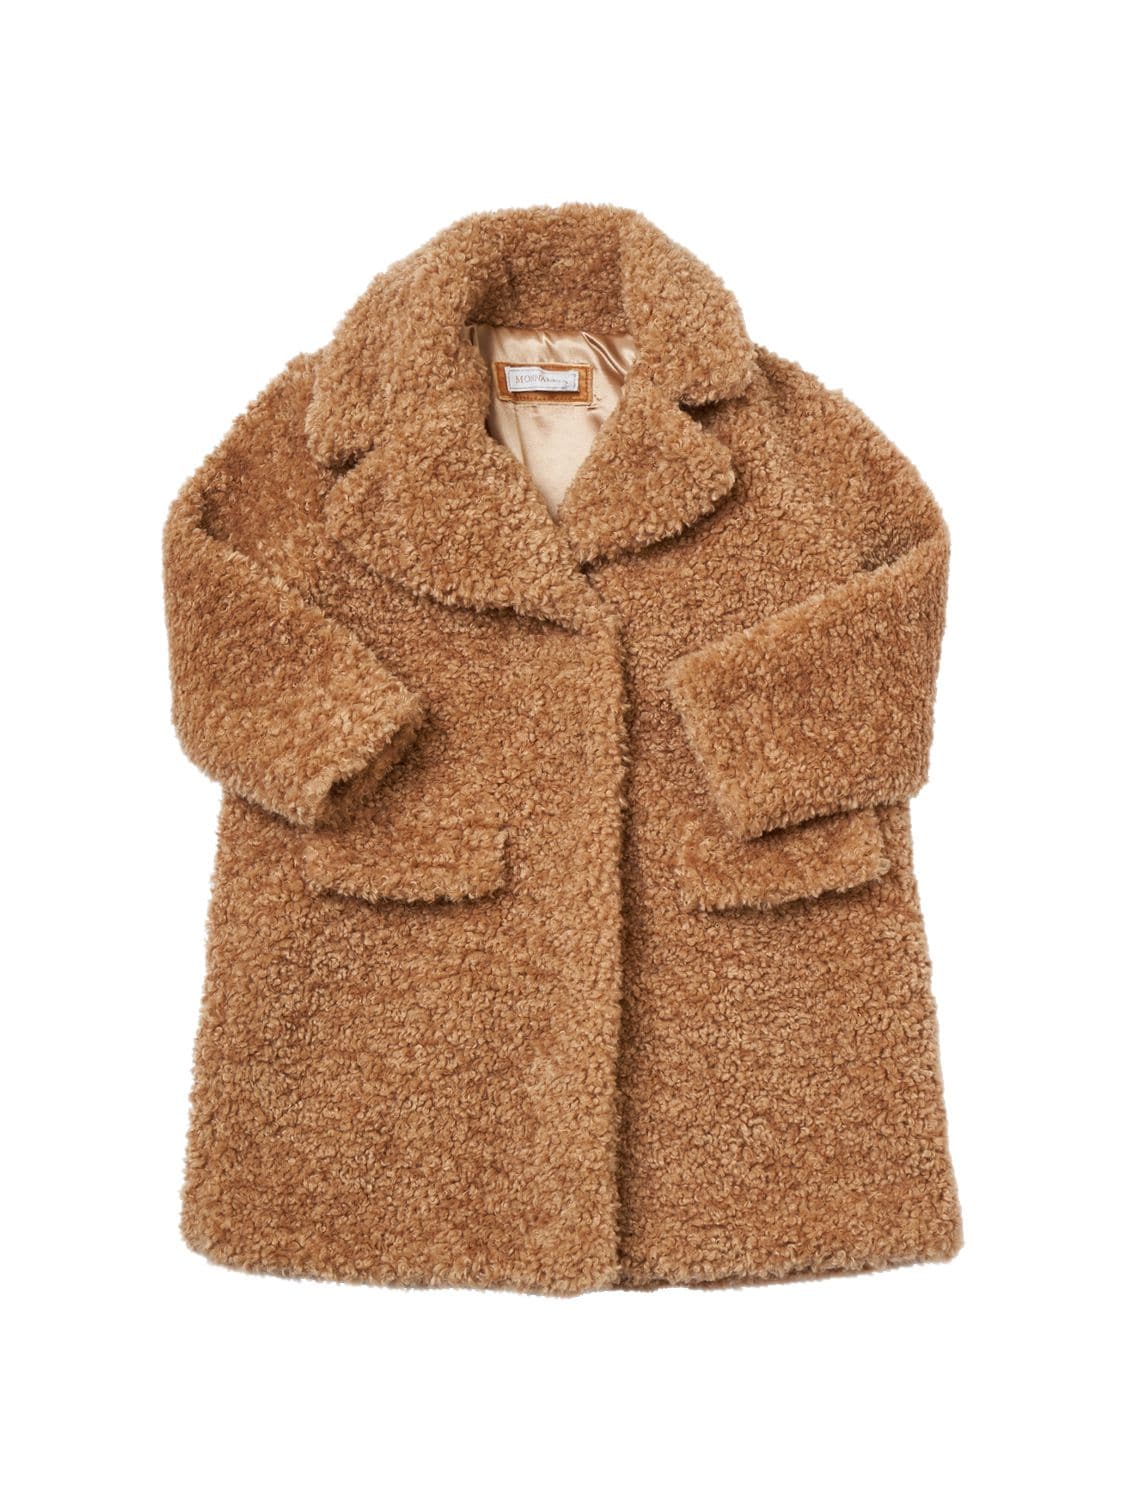 Image of Teddy Coat